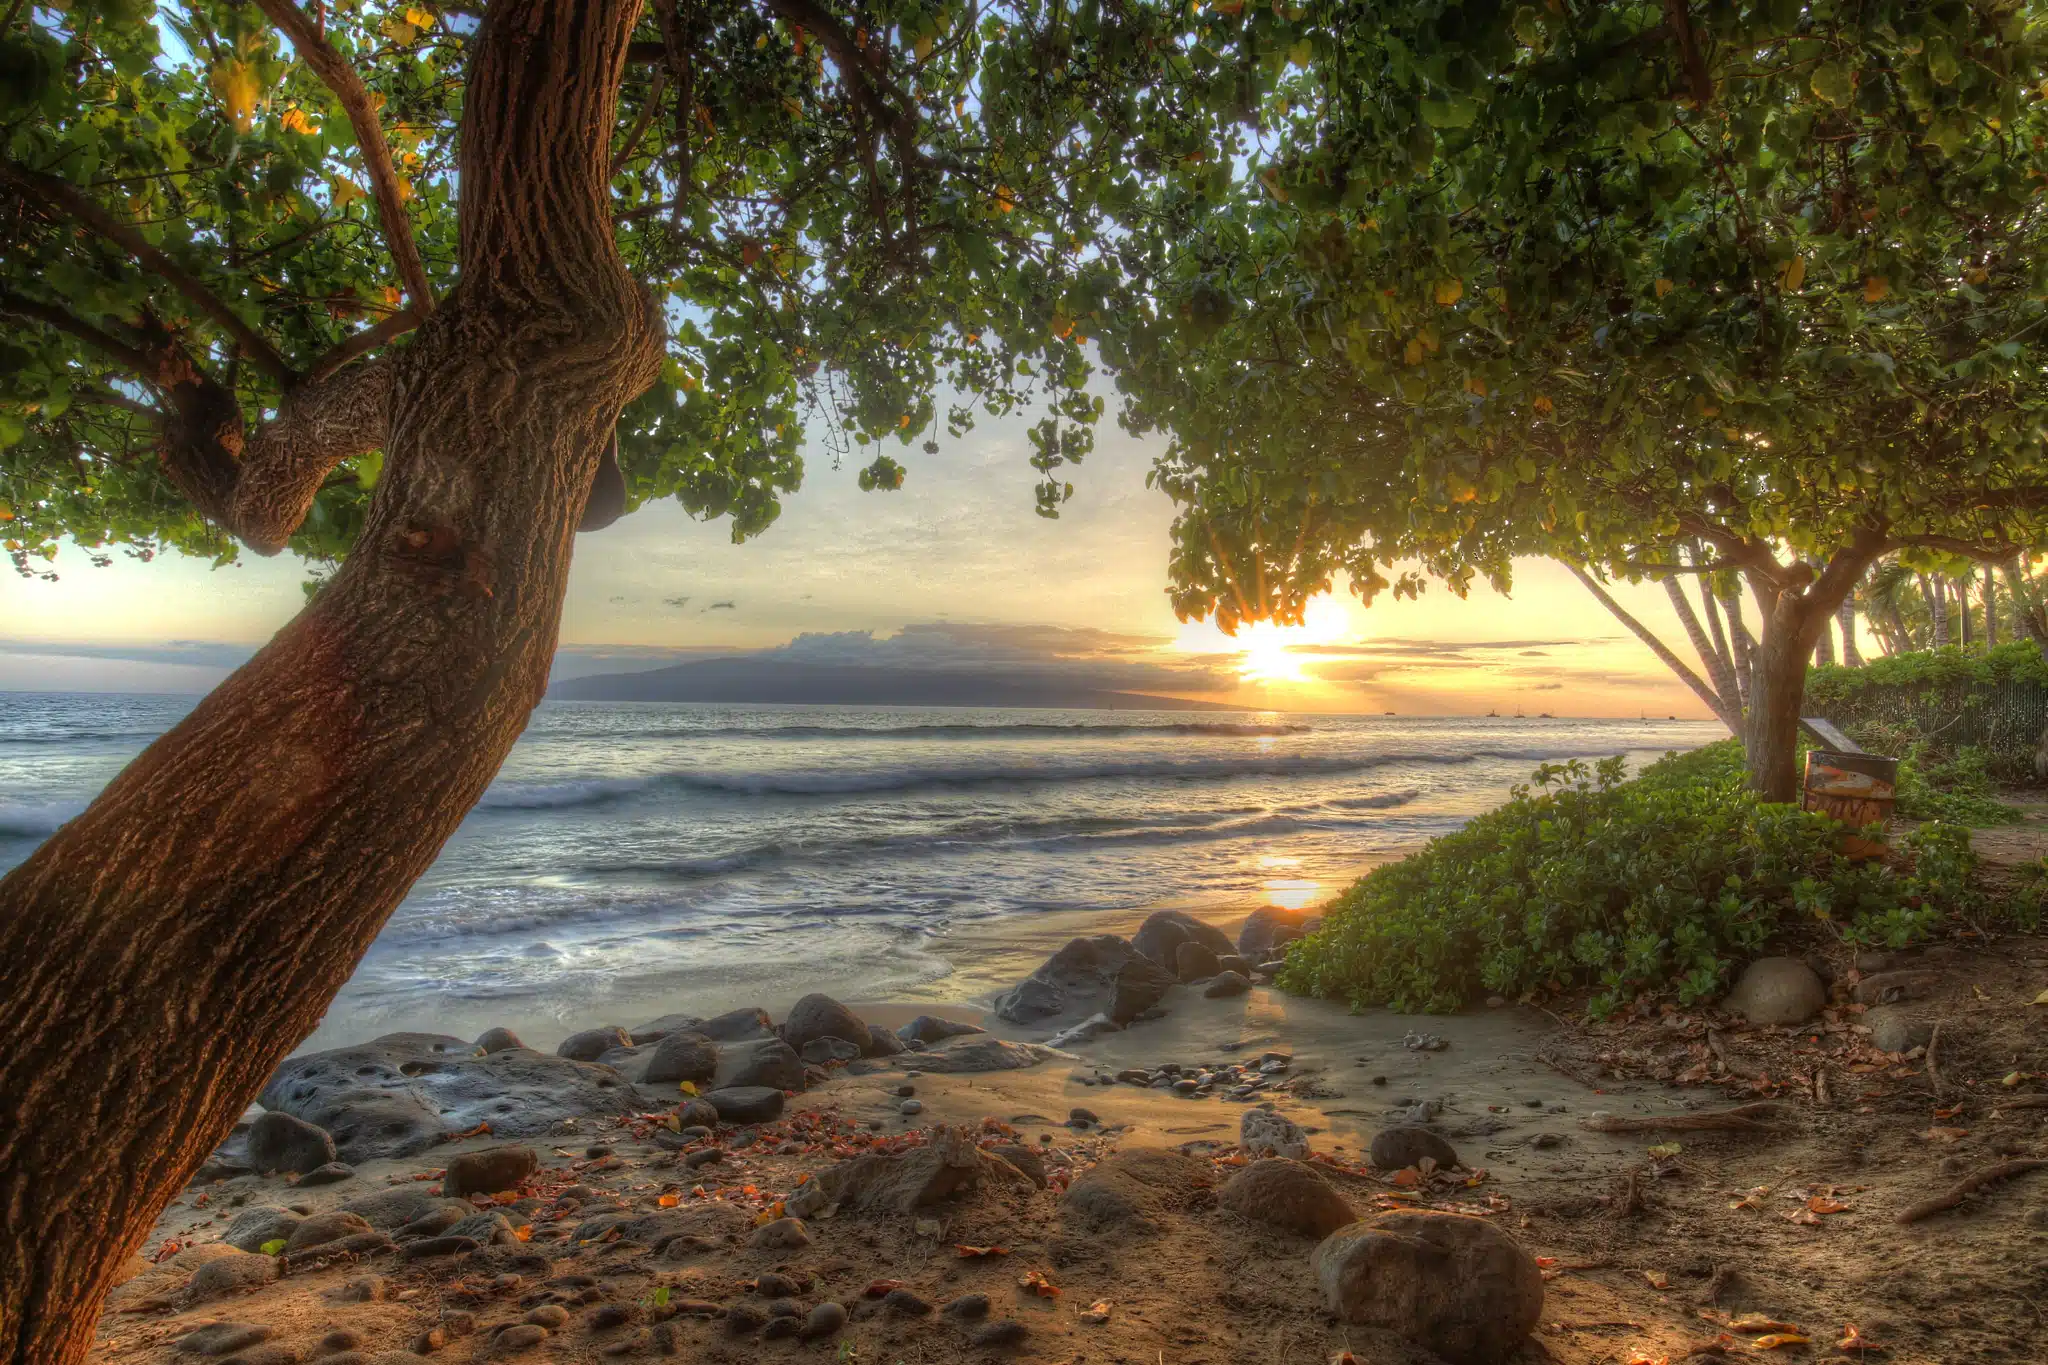 Puamana Beach County Park is a Beach located in the city of Lahaina on Maui, Hawaii